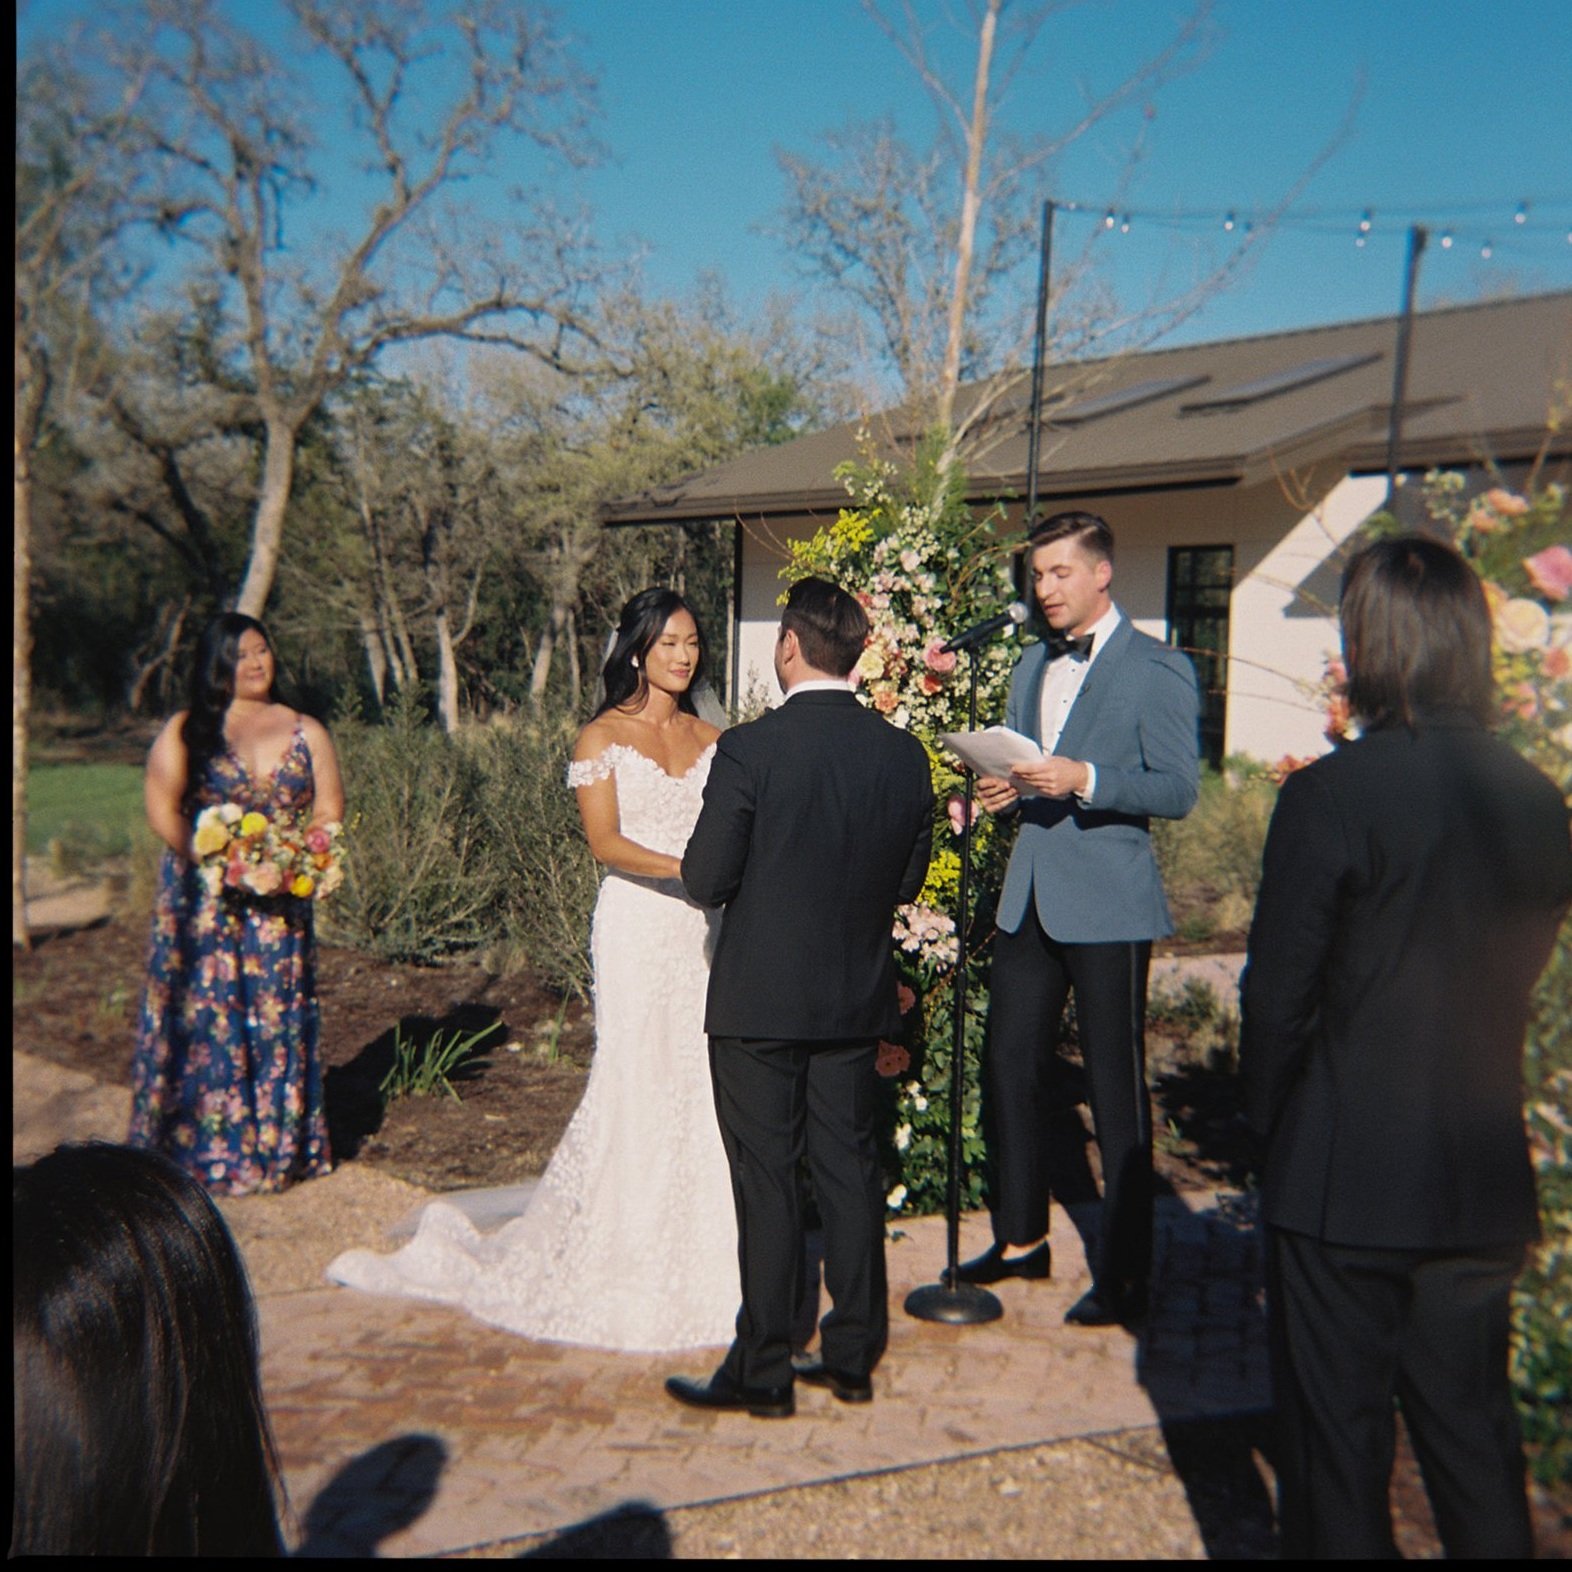 Best-Austin-Wedding-Photographers-Elopement-Film-35mm-Asheville-Santa-Barbara-Grand-Lady-110.jpg